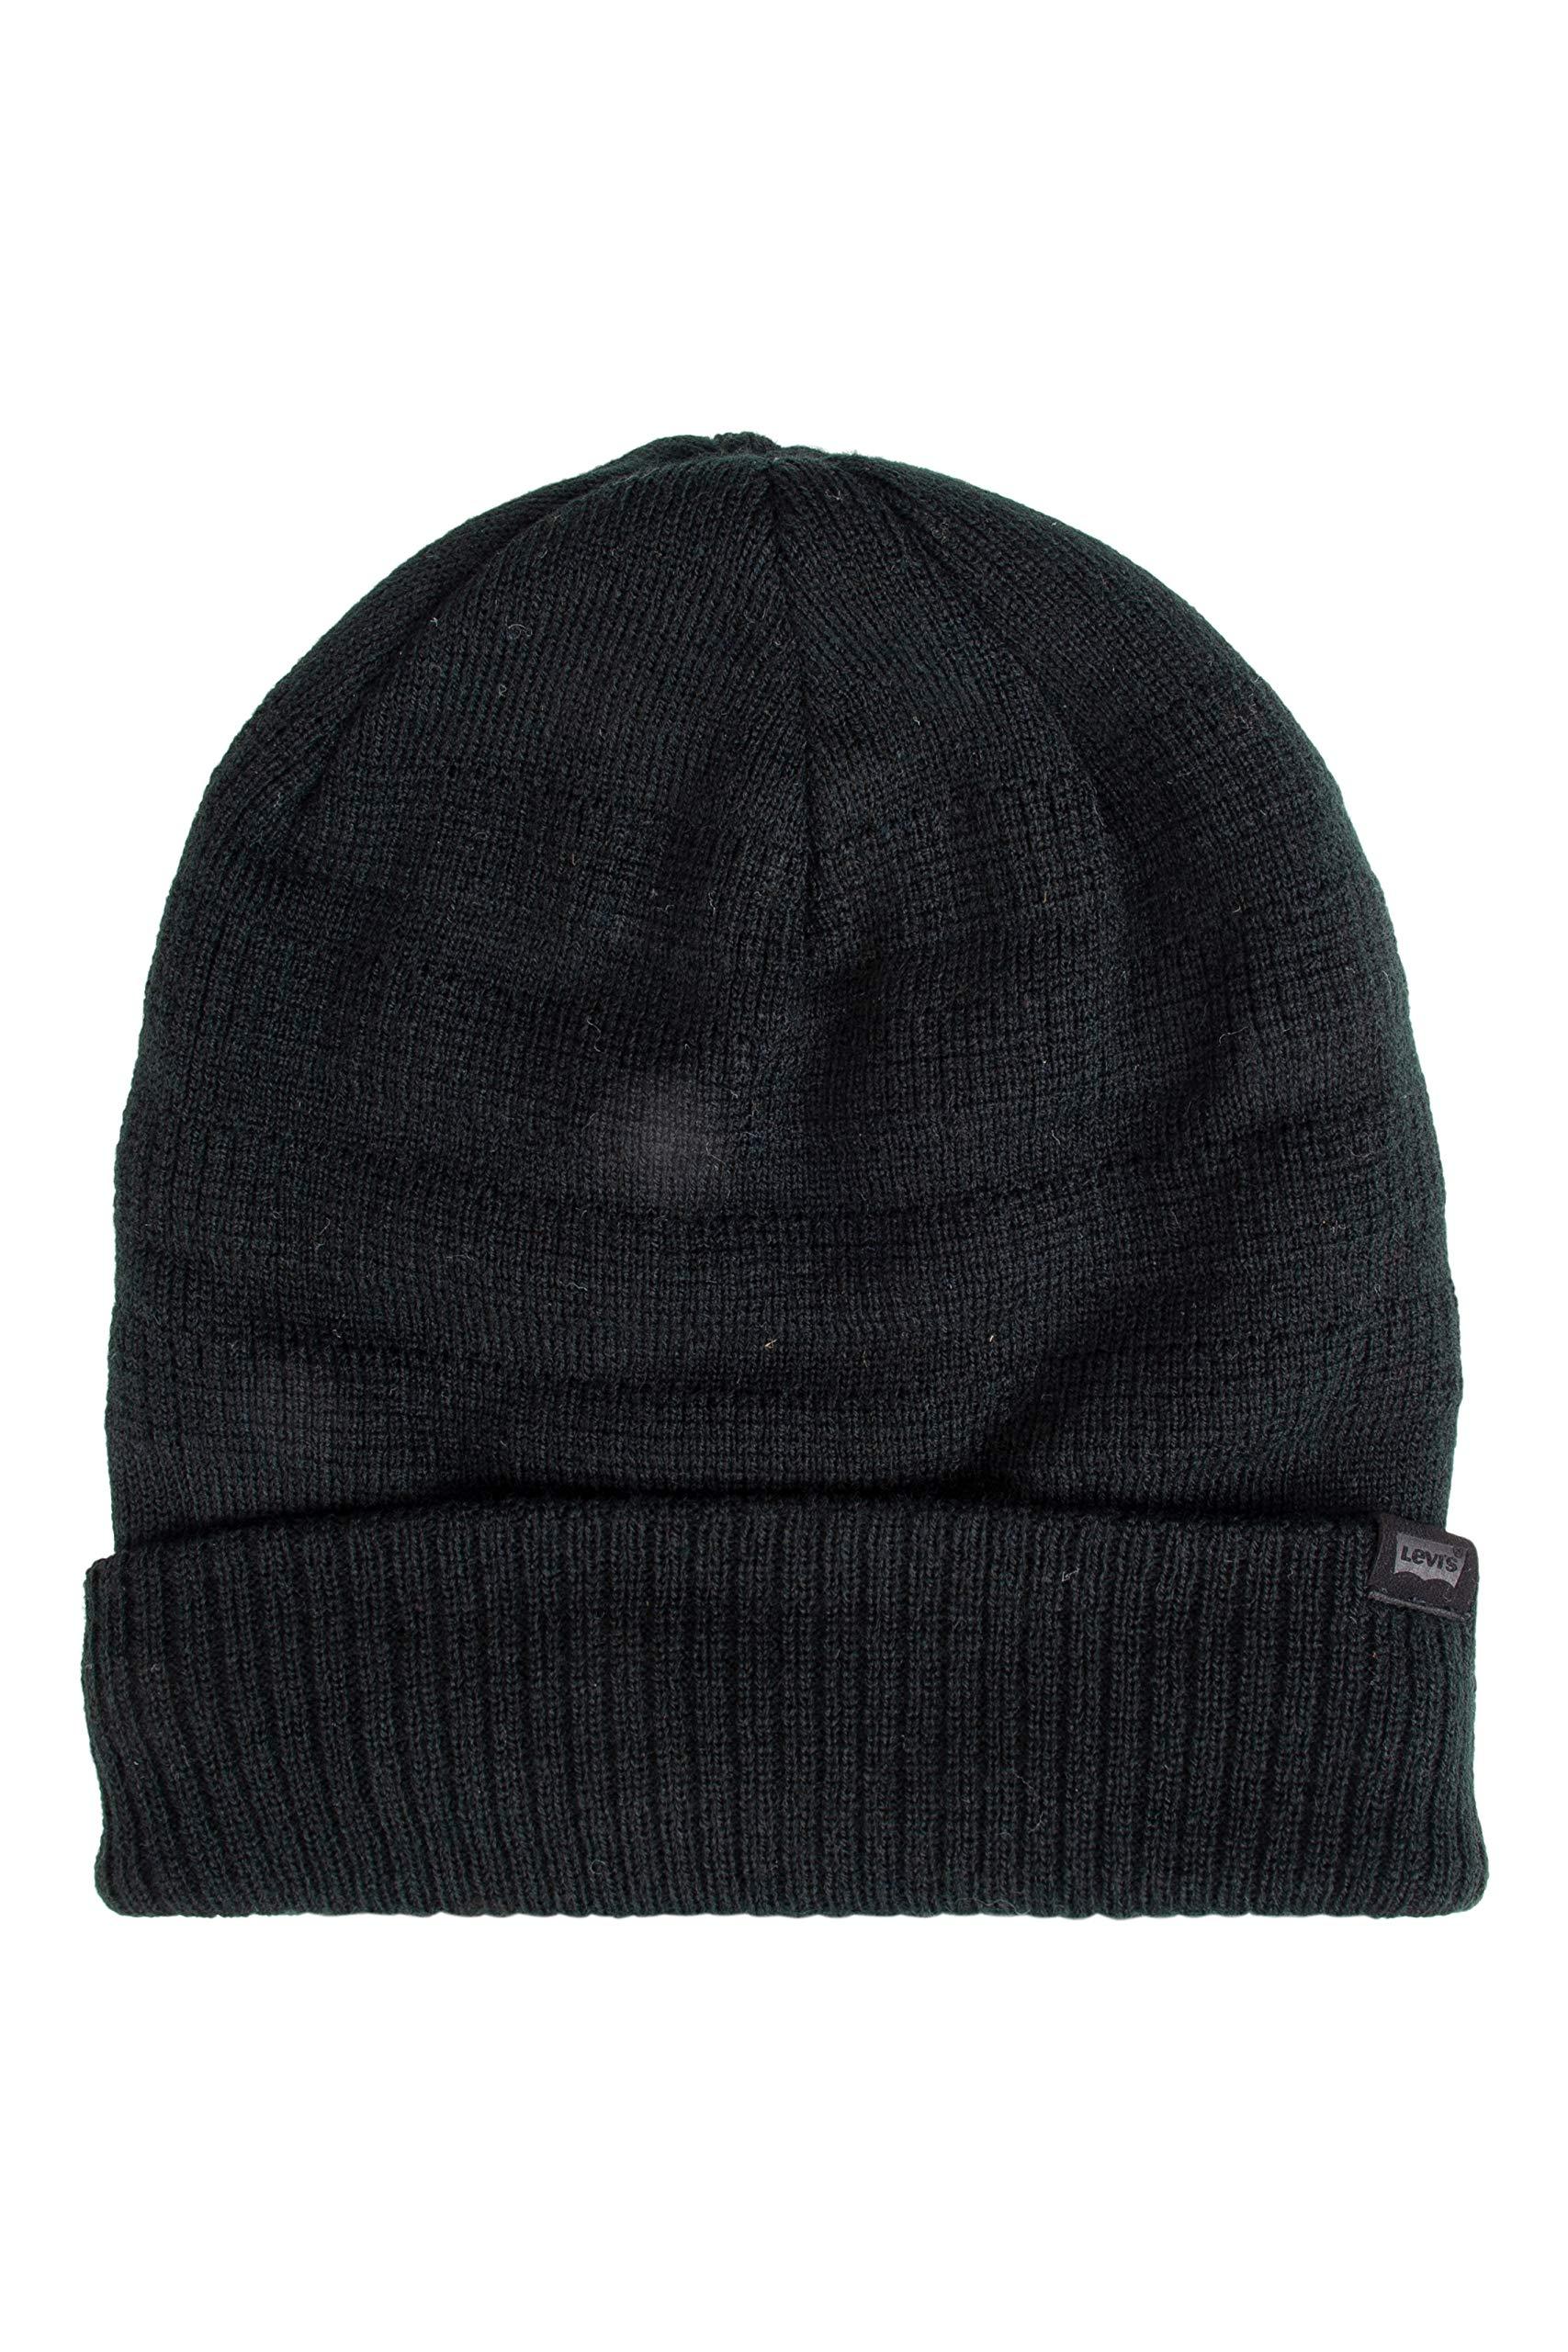 levis winter hat